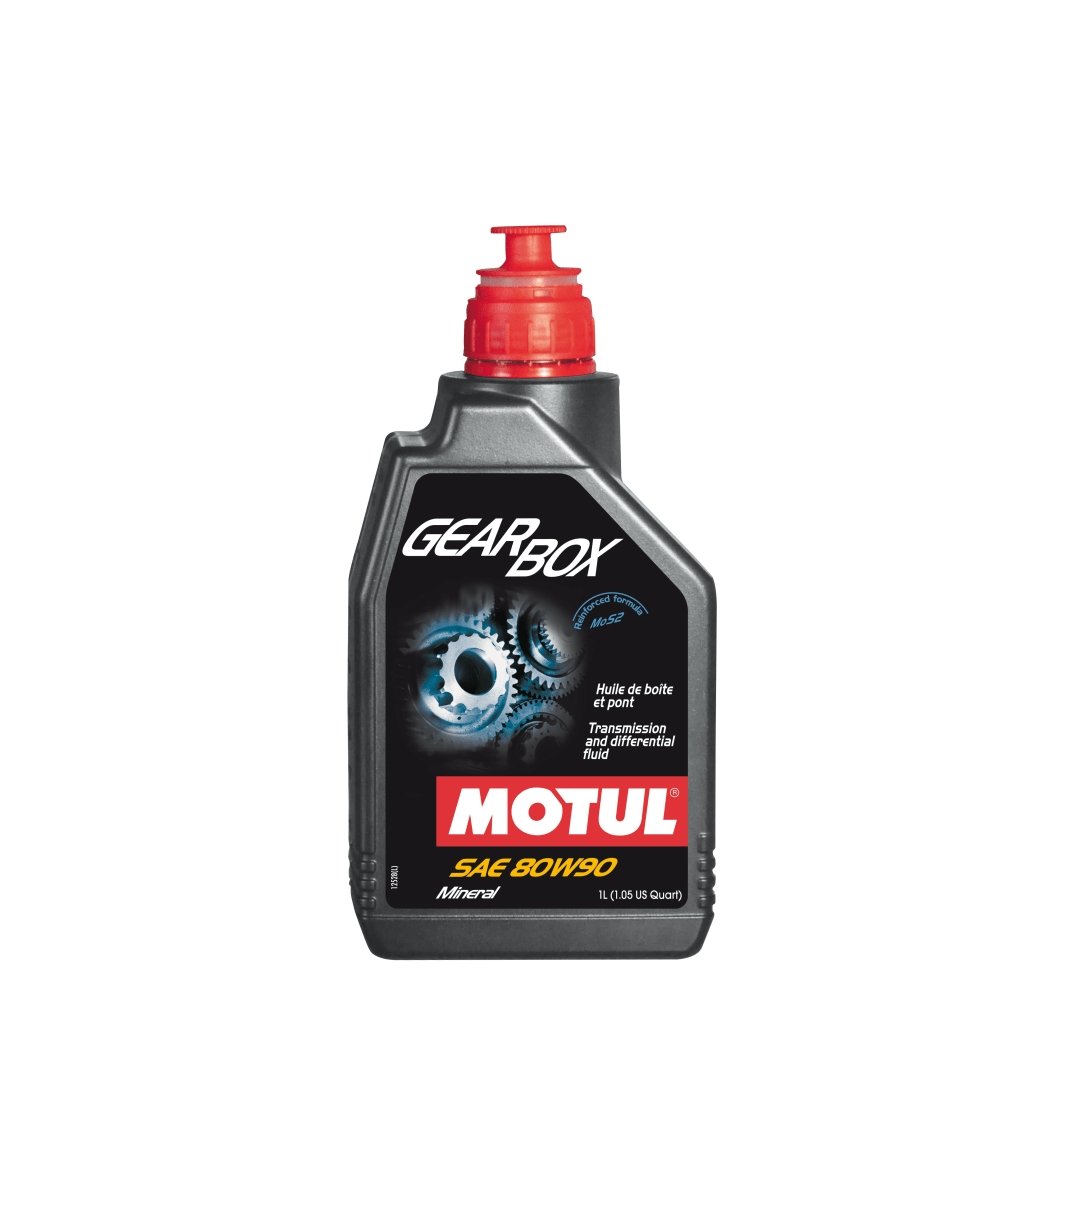 Motul Gearbox 80W90 Gear Oil - 1L - Dirty Racing Products